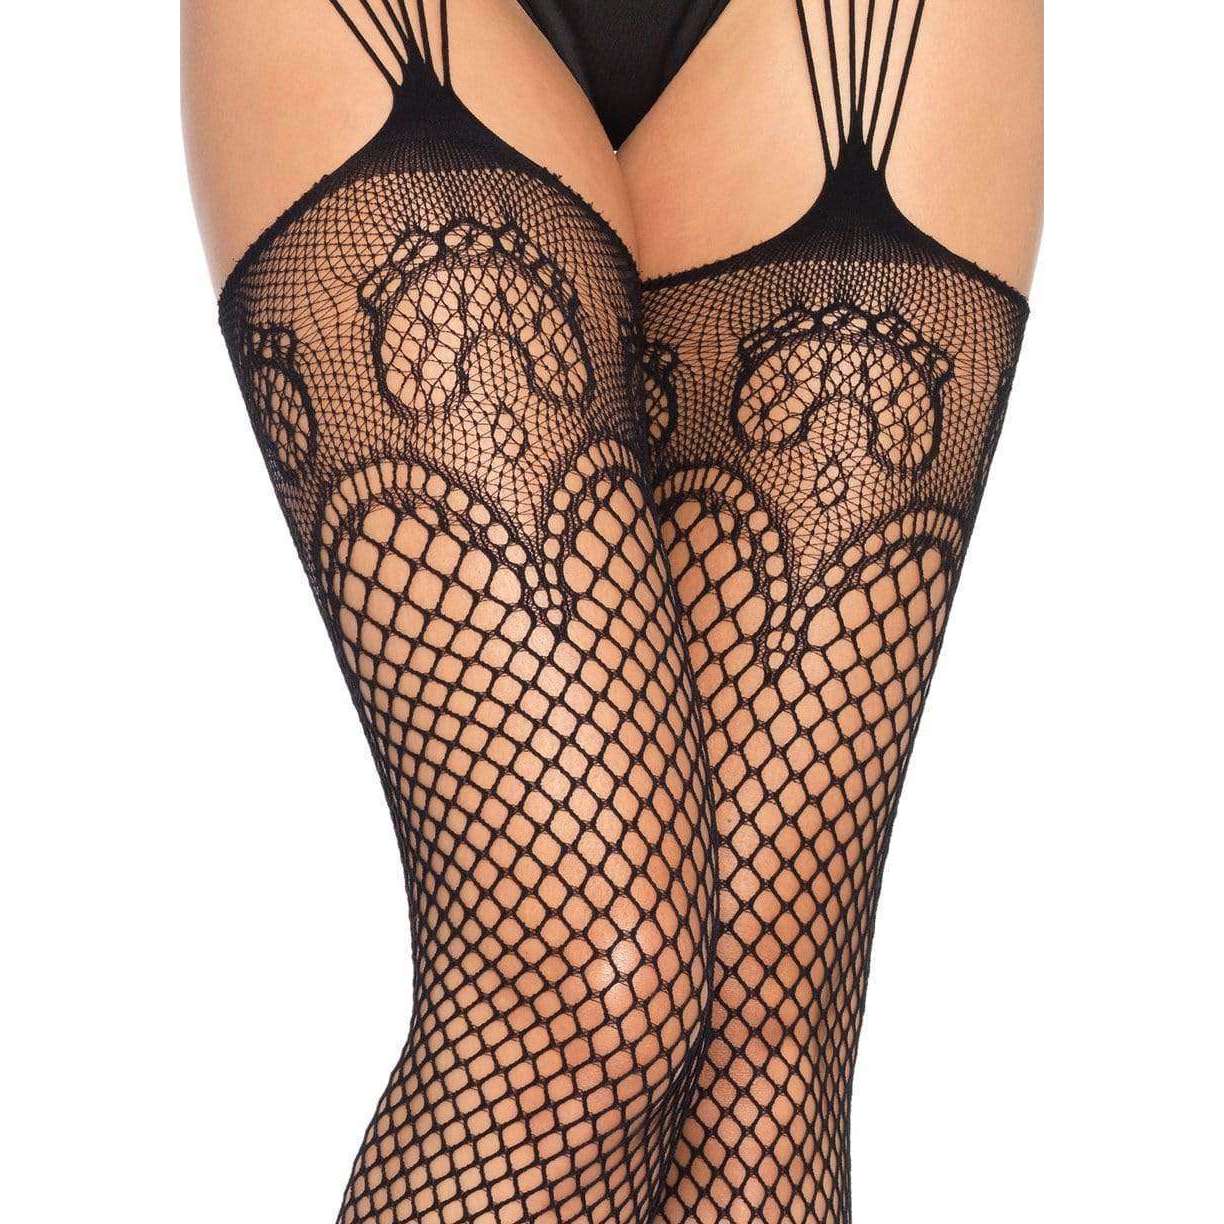 Black Net Stockings w/ Duchess Lace Top & Strand Garter Belt